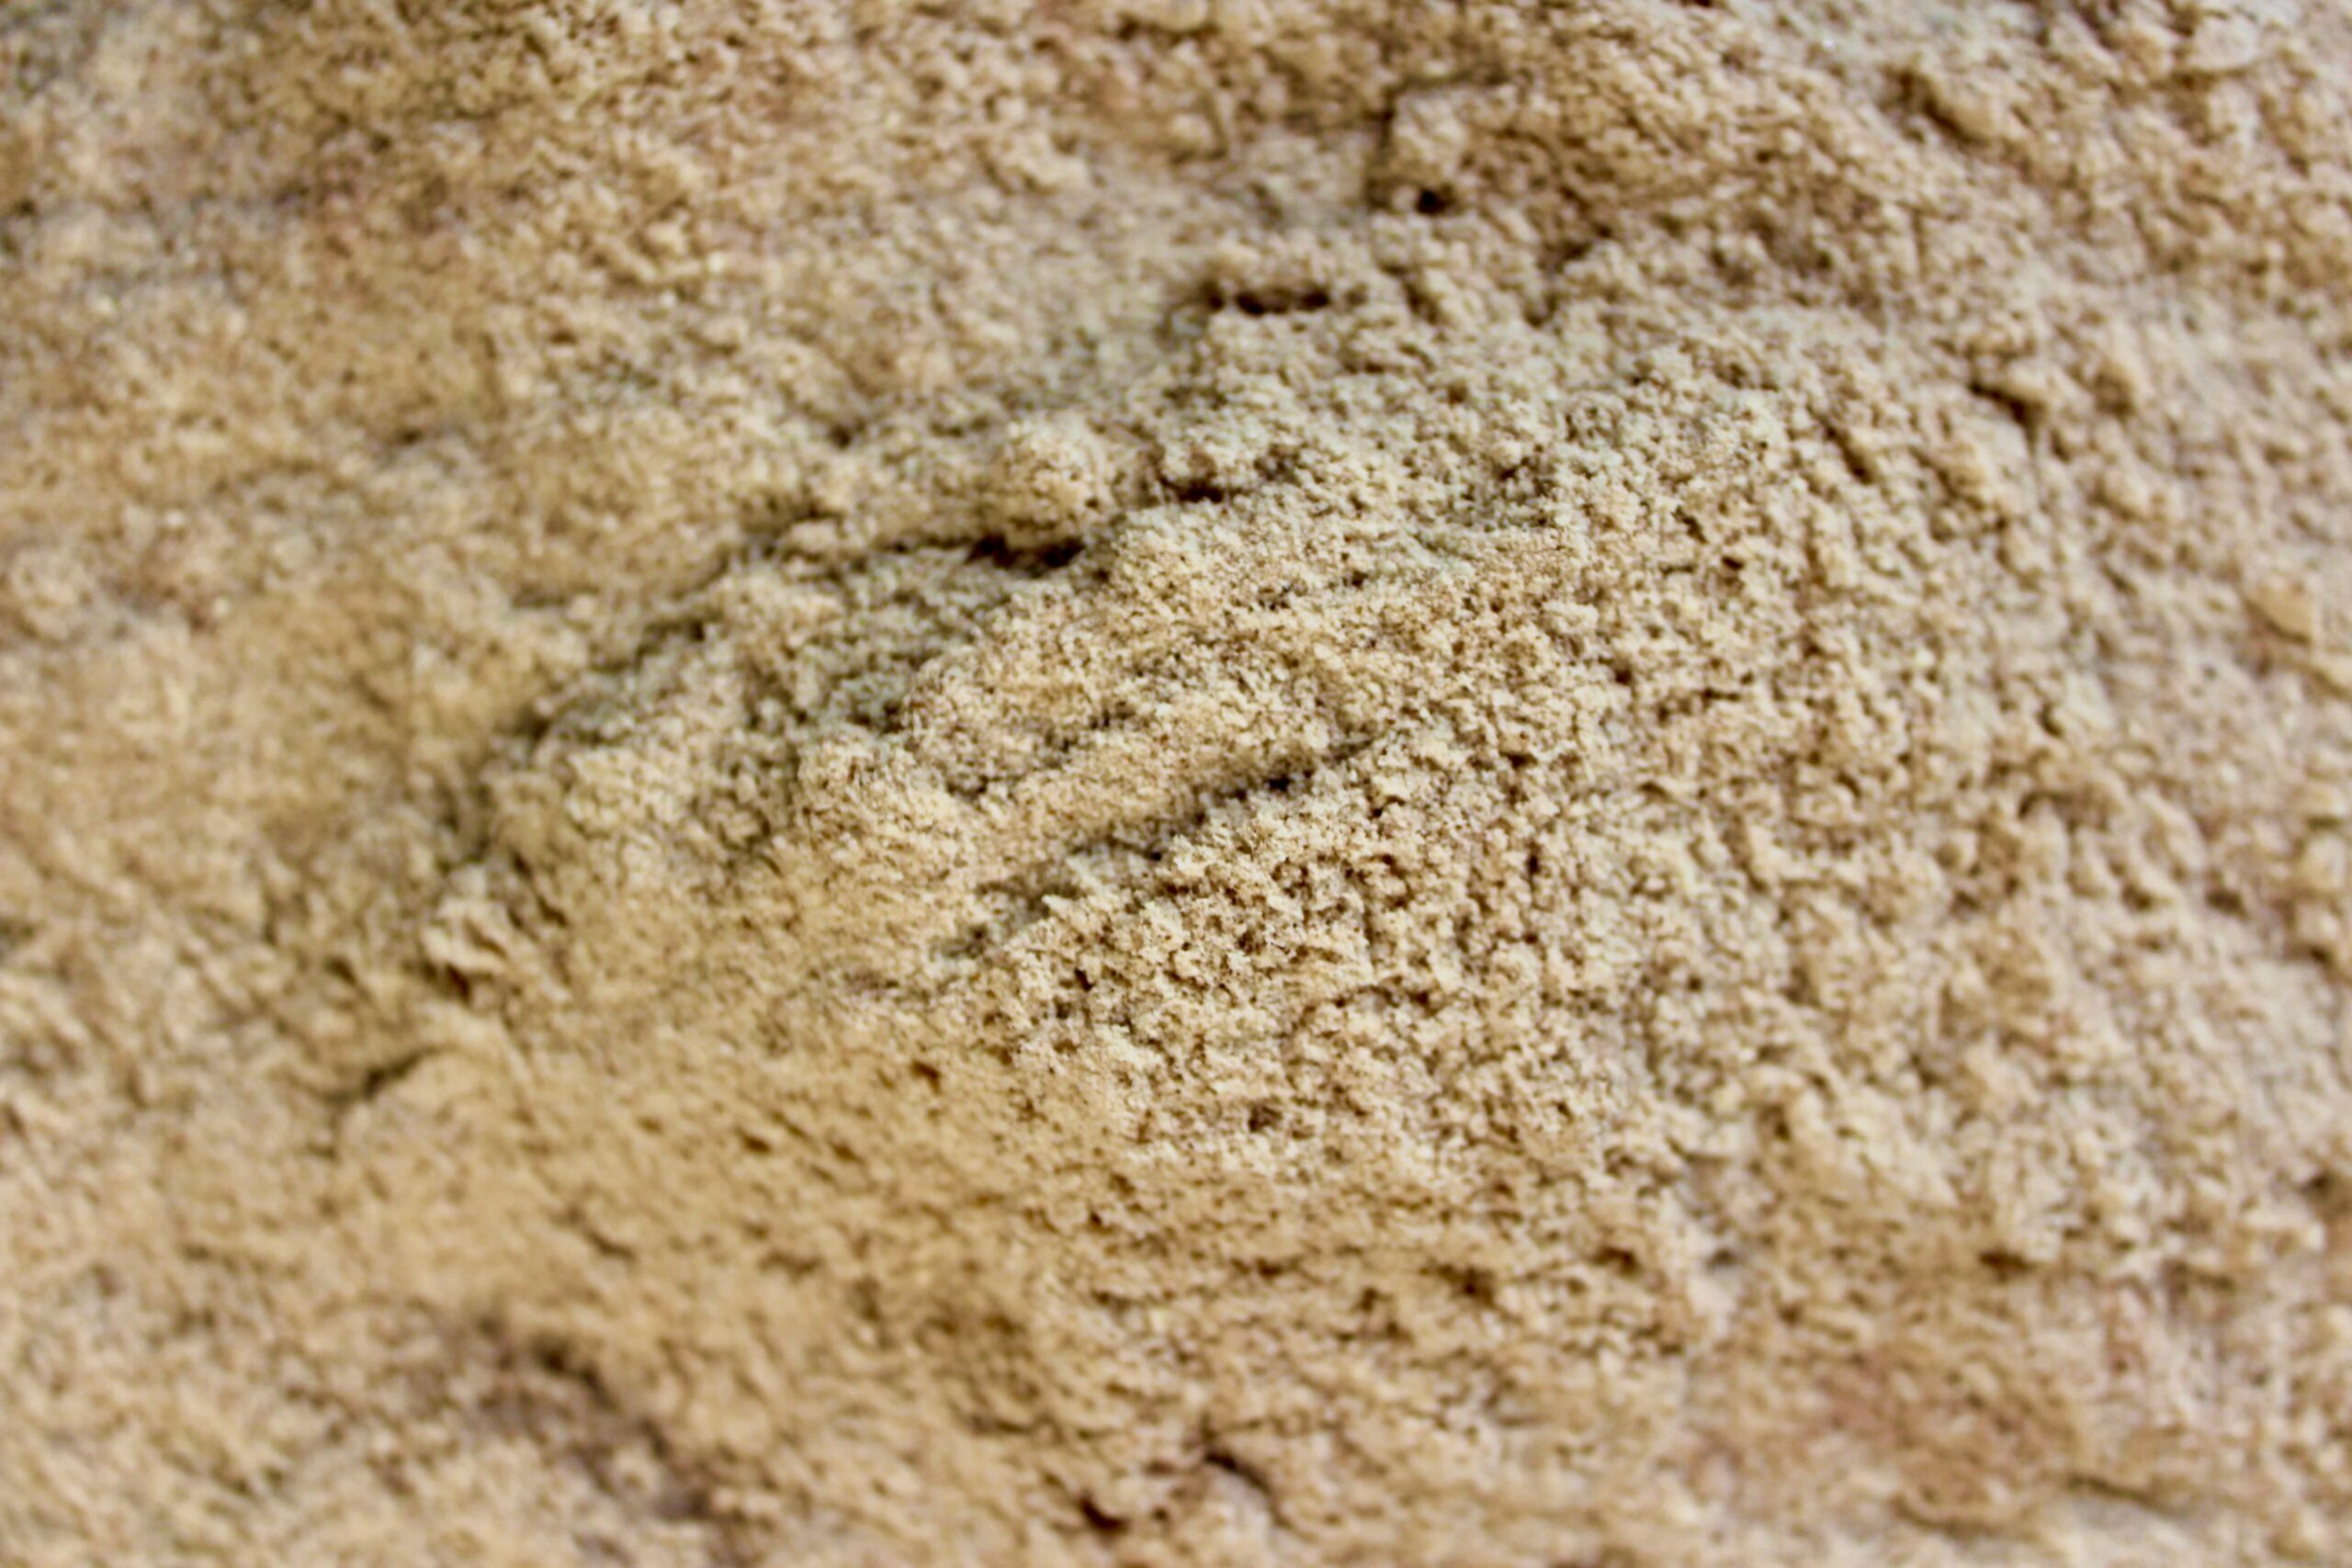 Close-up of hemp dust.